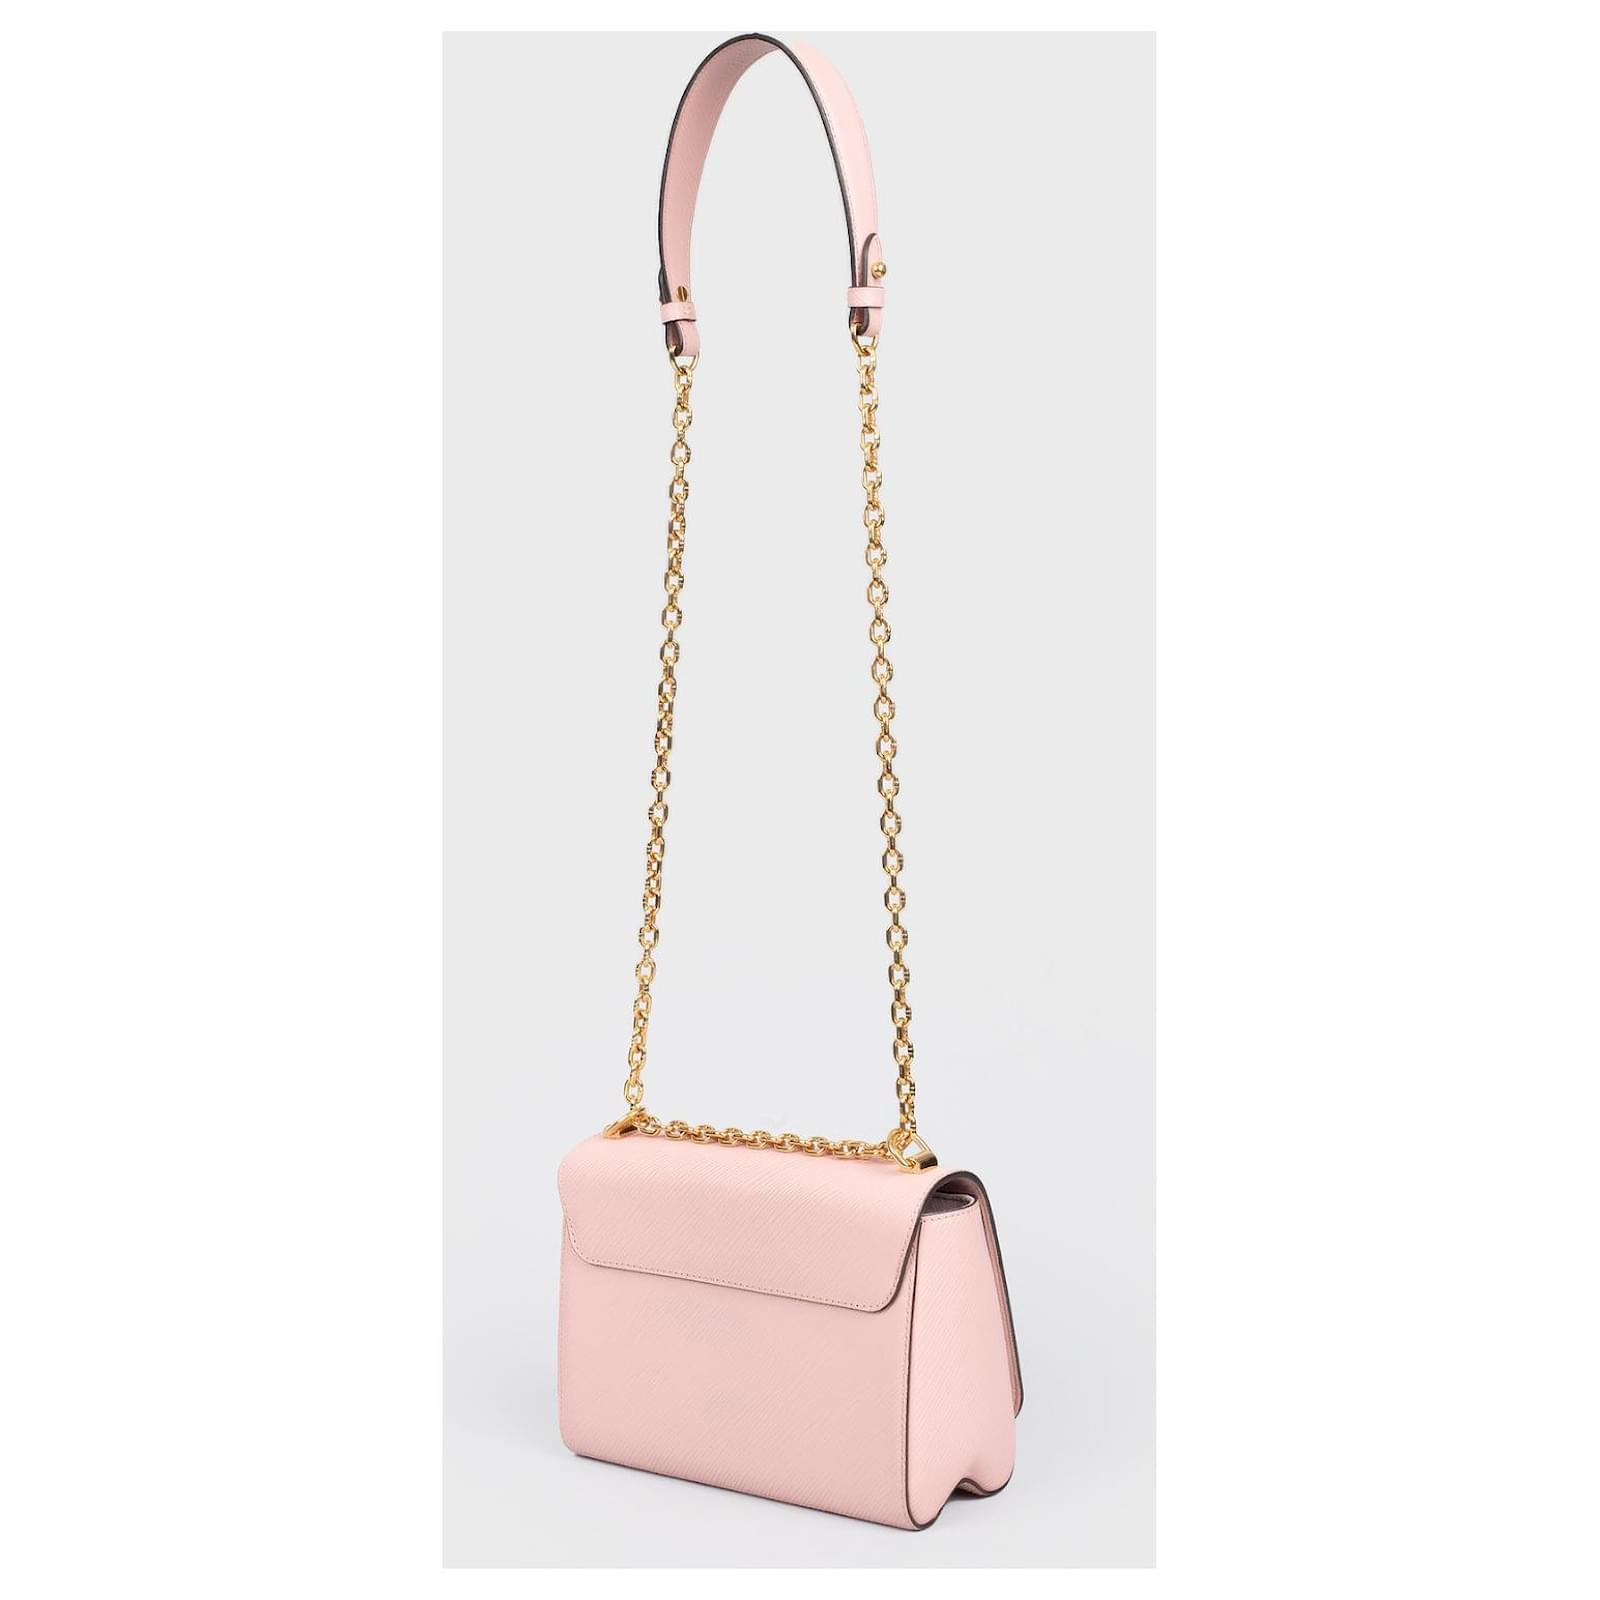 Louis Vuitton Limited Edition Twist Bloom Flower Black Epi Leather Handbag